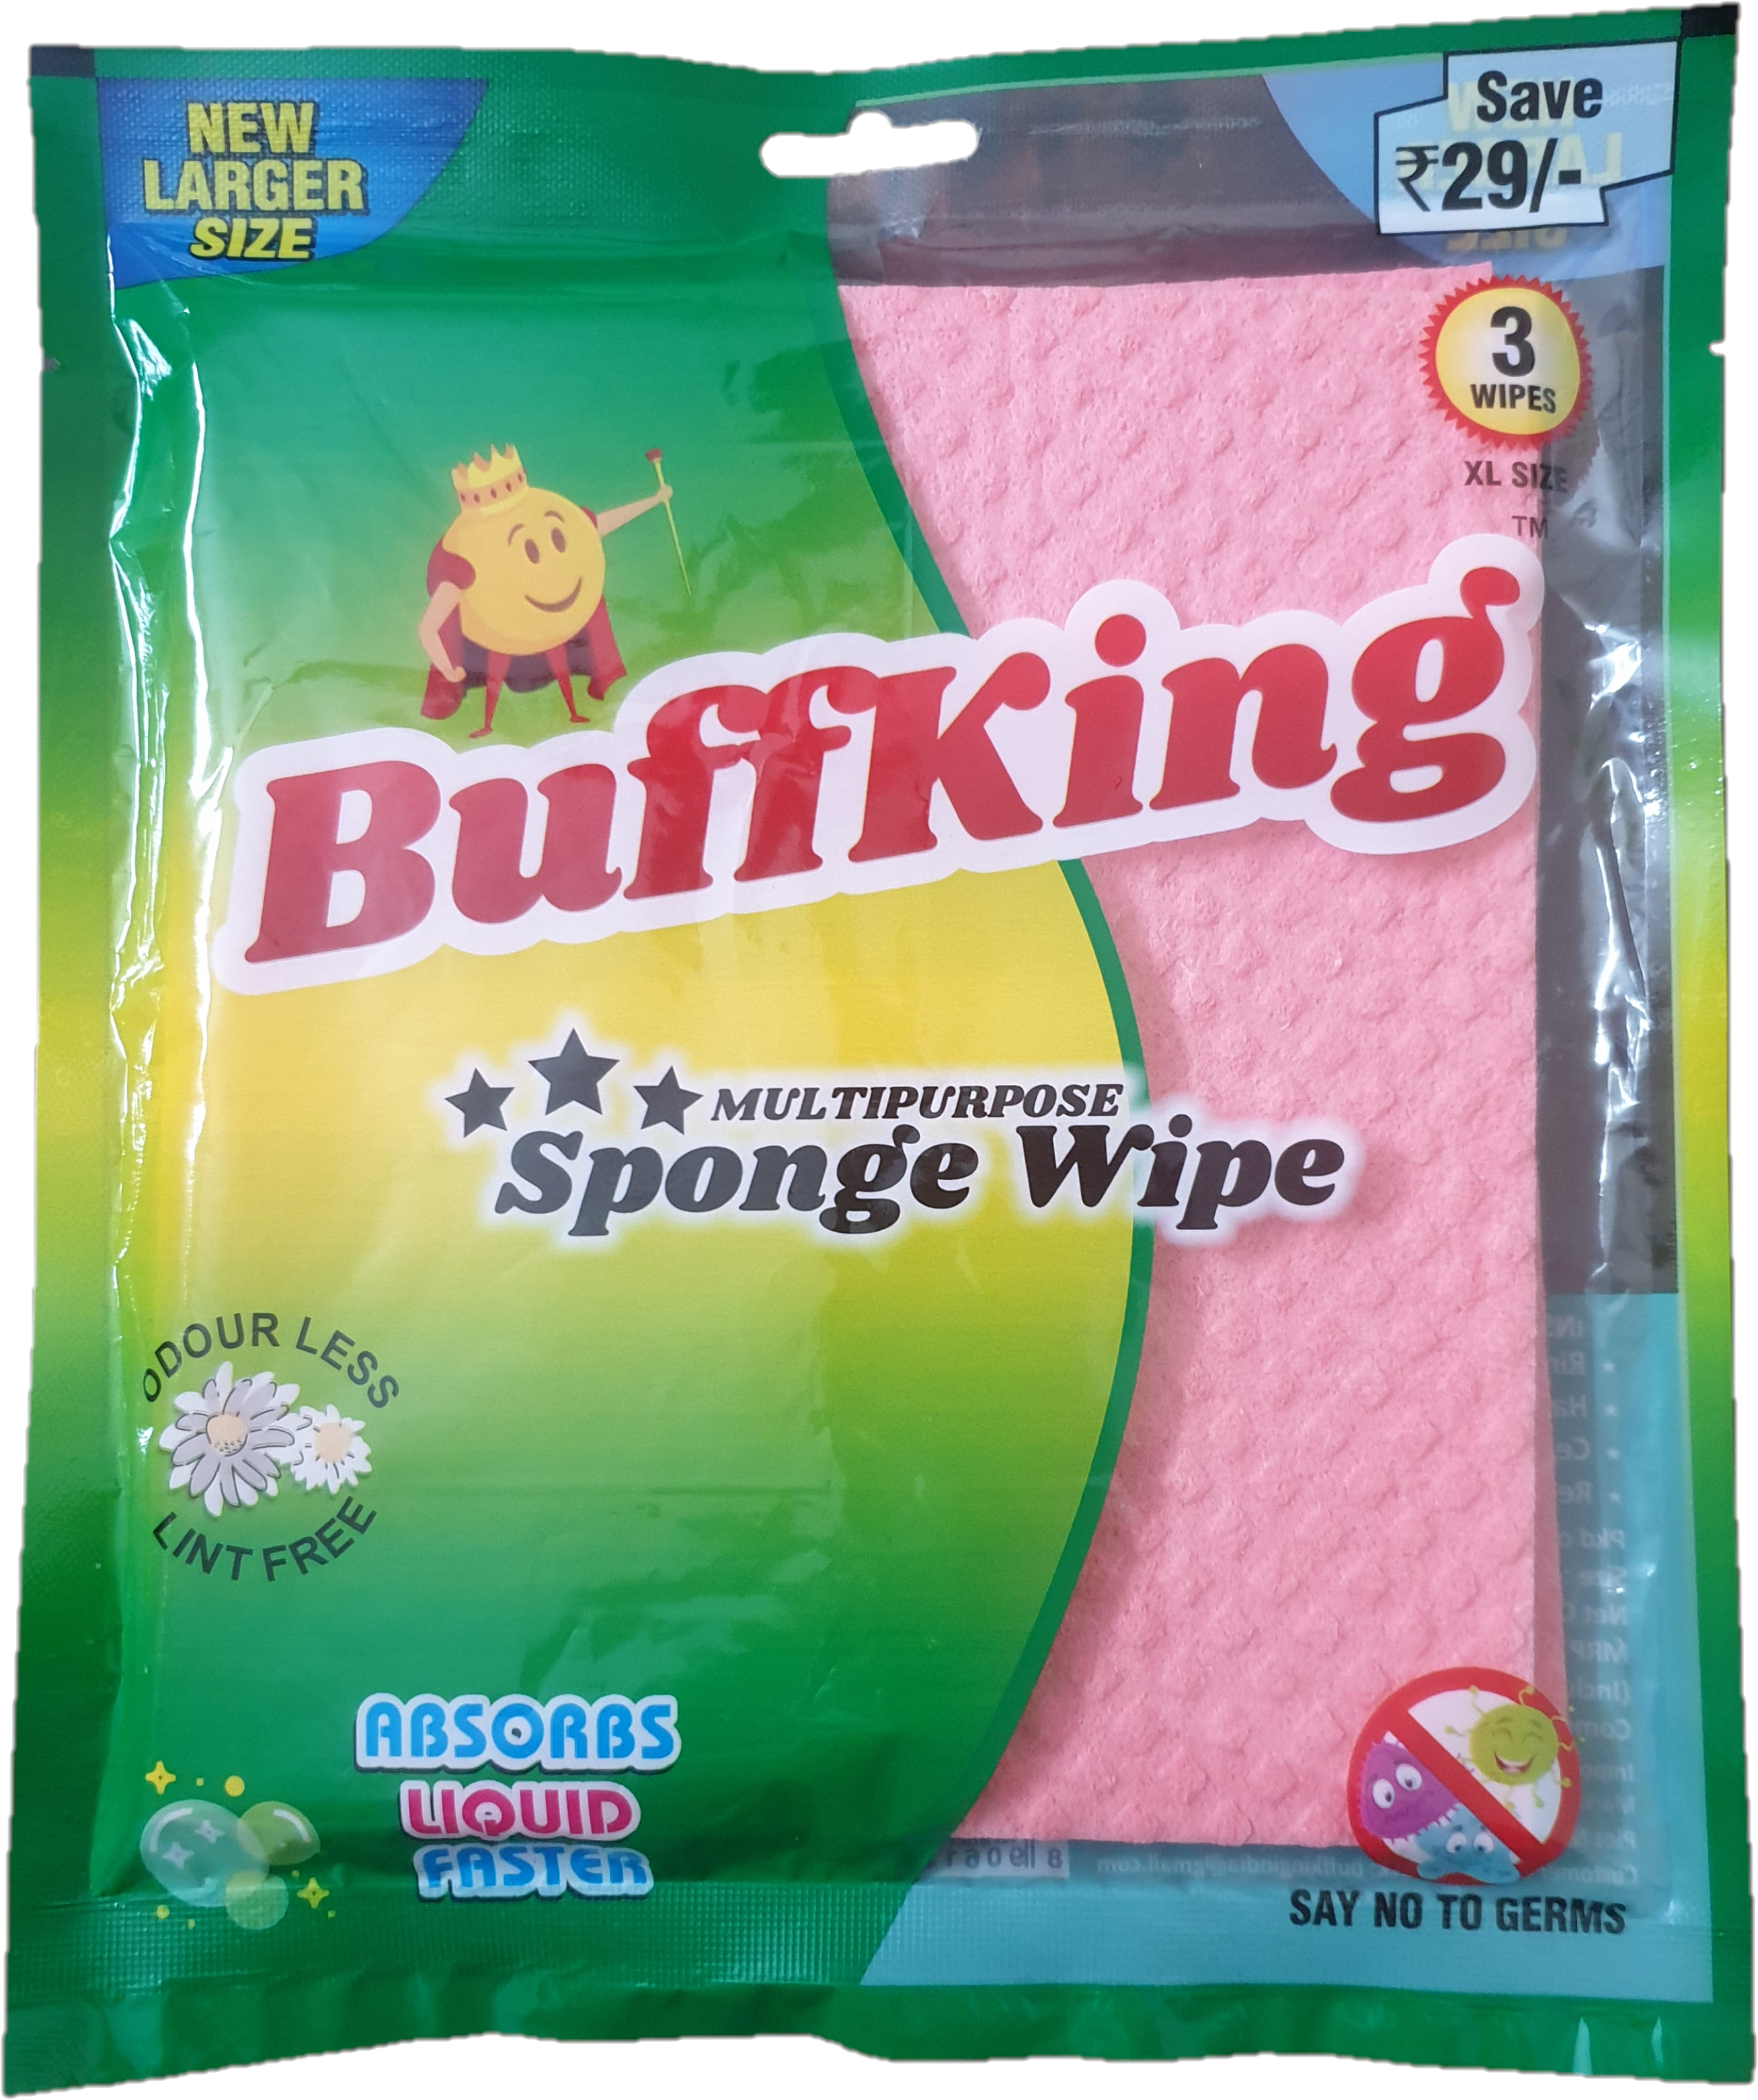 BUFFKING Scrub Sponge 2 in 1 PAD for Kitchen, Sink, Bathroom Cleaning –  HOUSEKEEPING MART